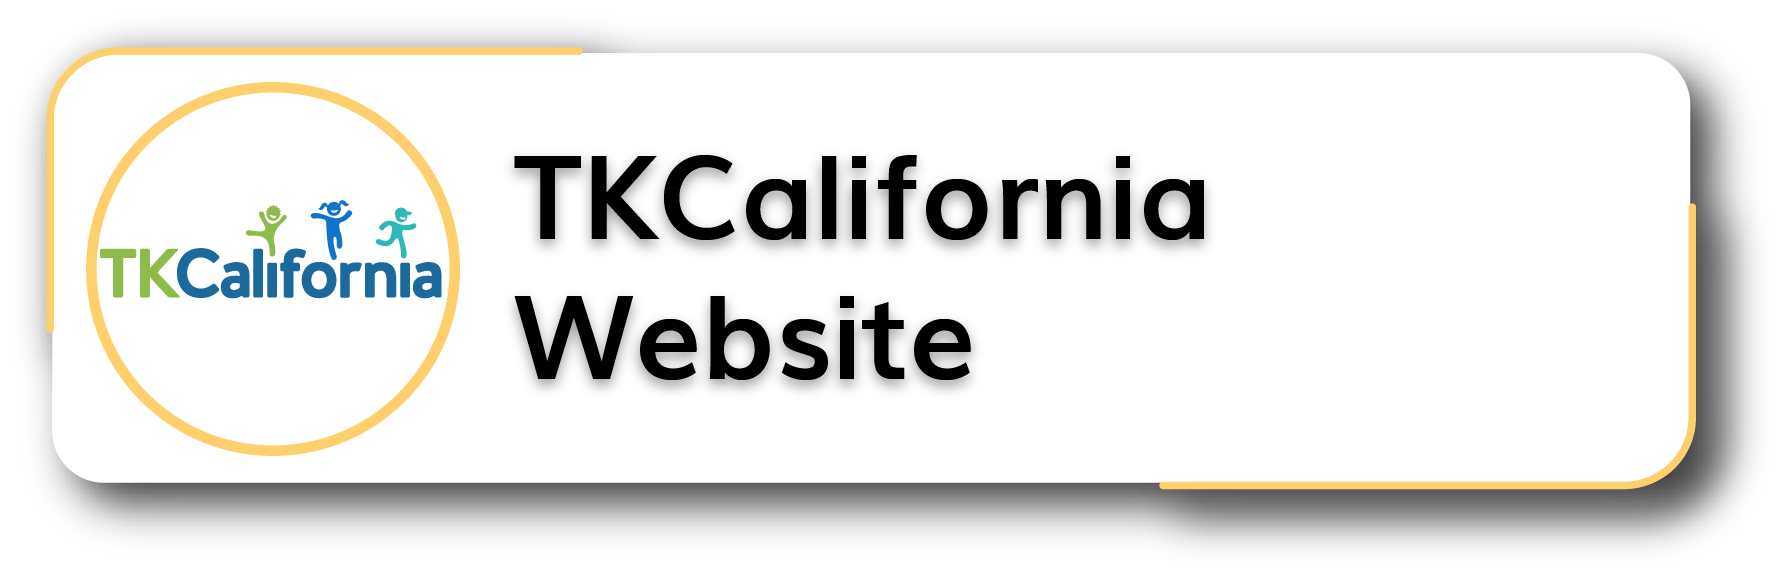 TKCalifornia Website Button